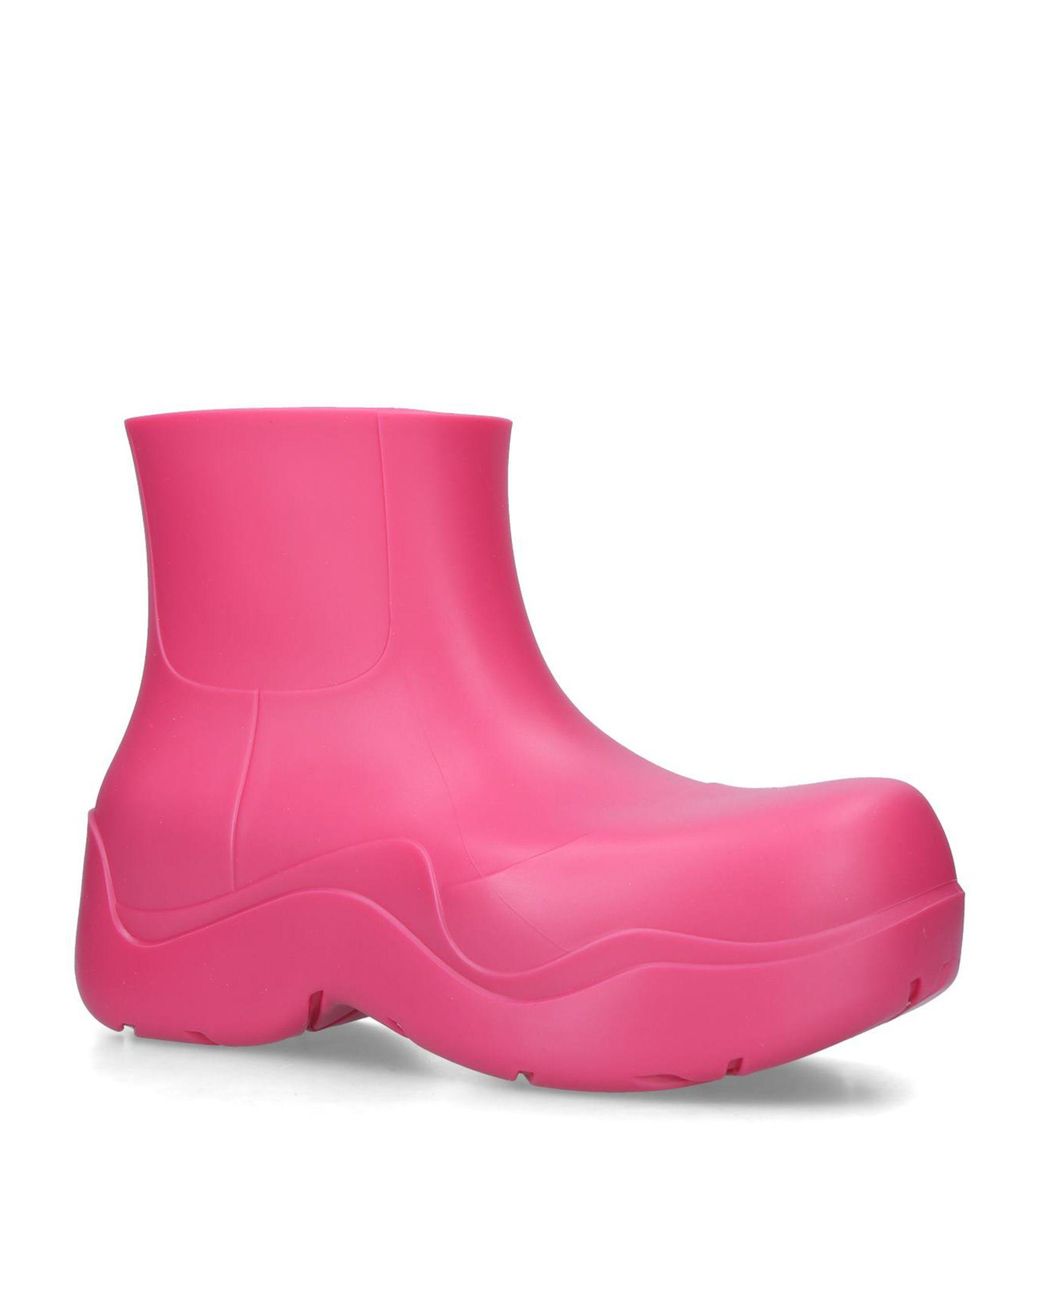 Bottega Veneta Rubber Bv Puddle Boots in Pink - Lyst